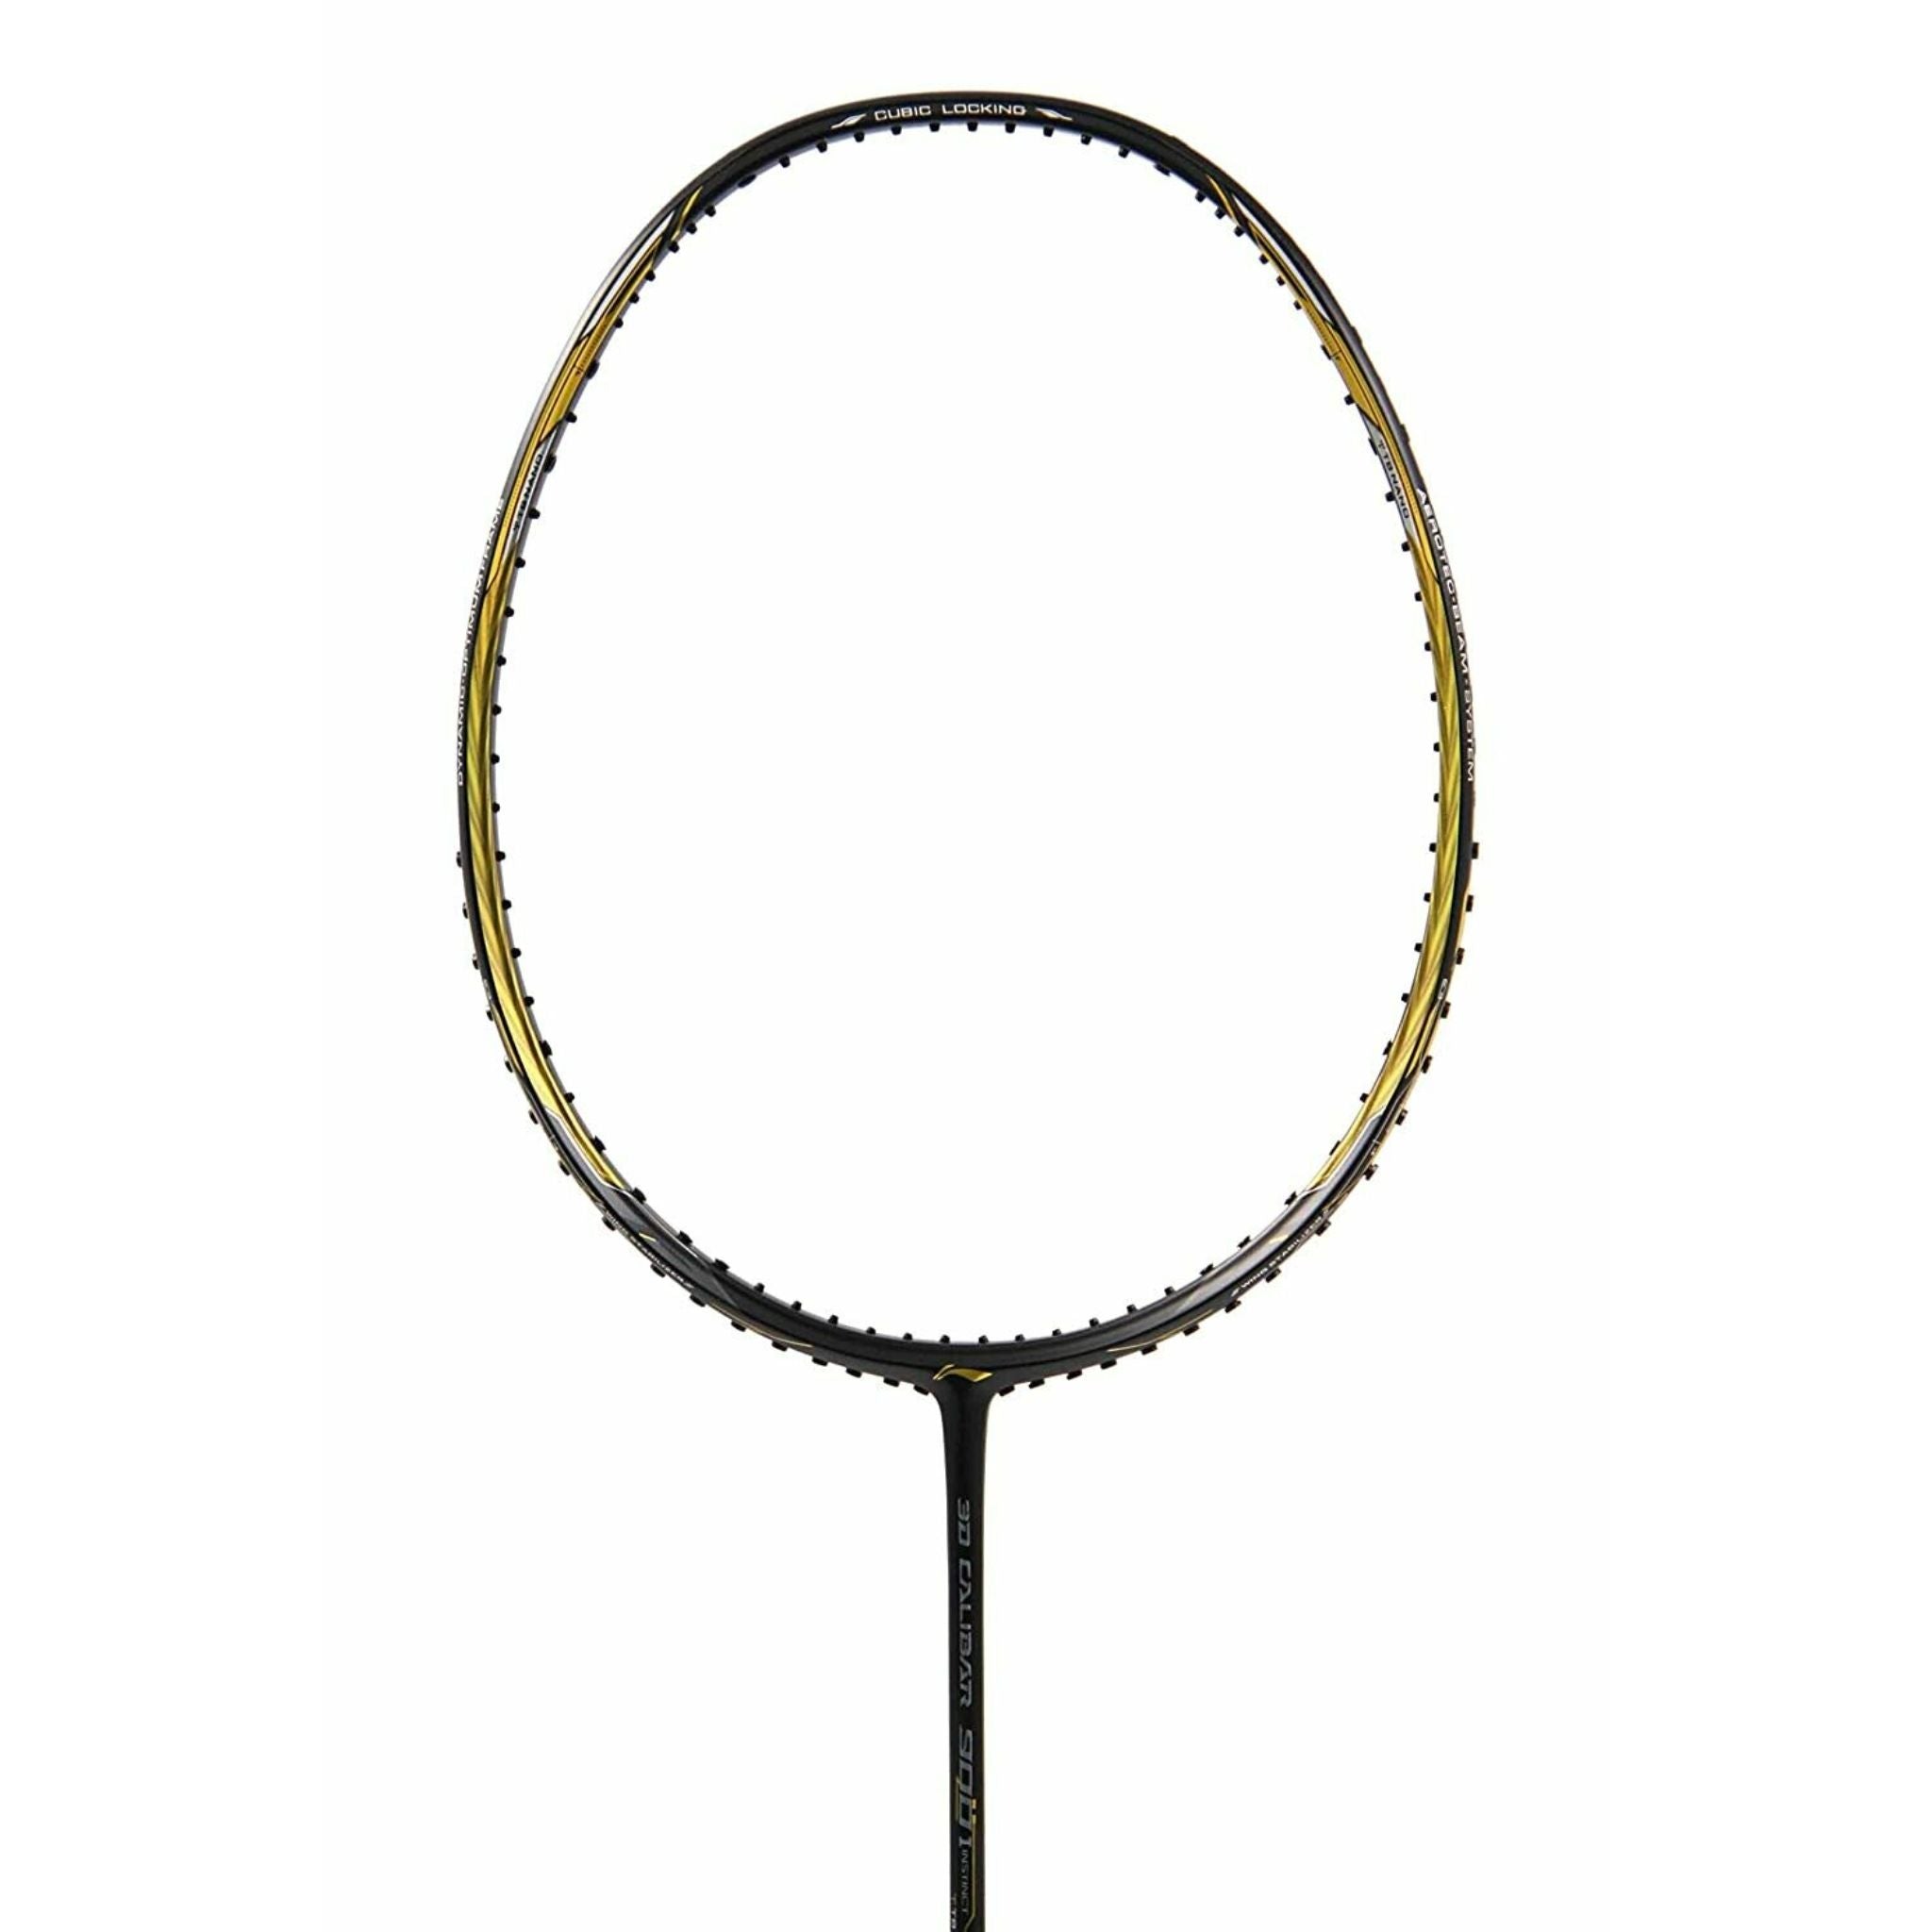 LI-NING 3d Calibar 900 Instinct Badminton Racket